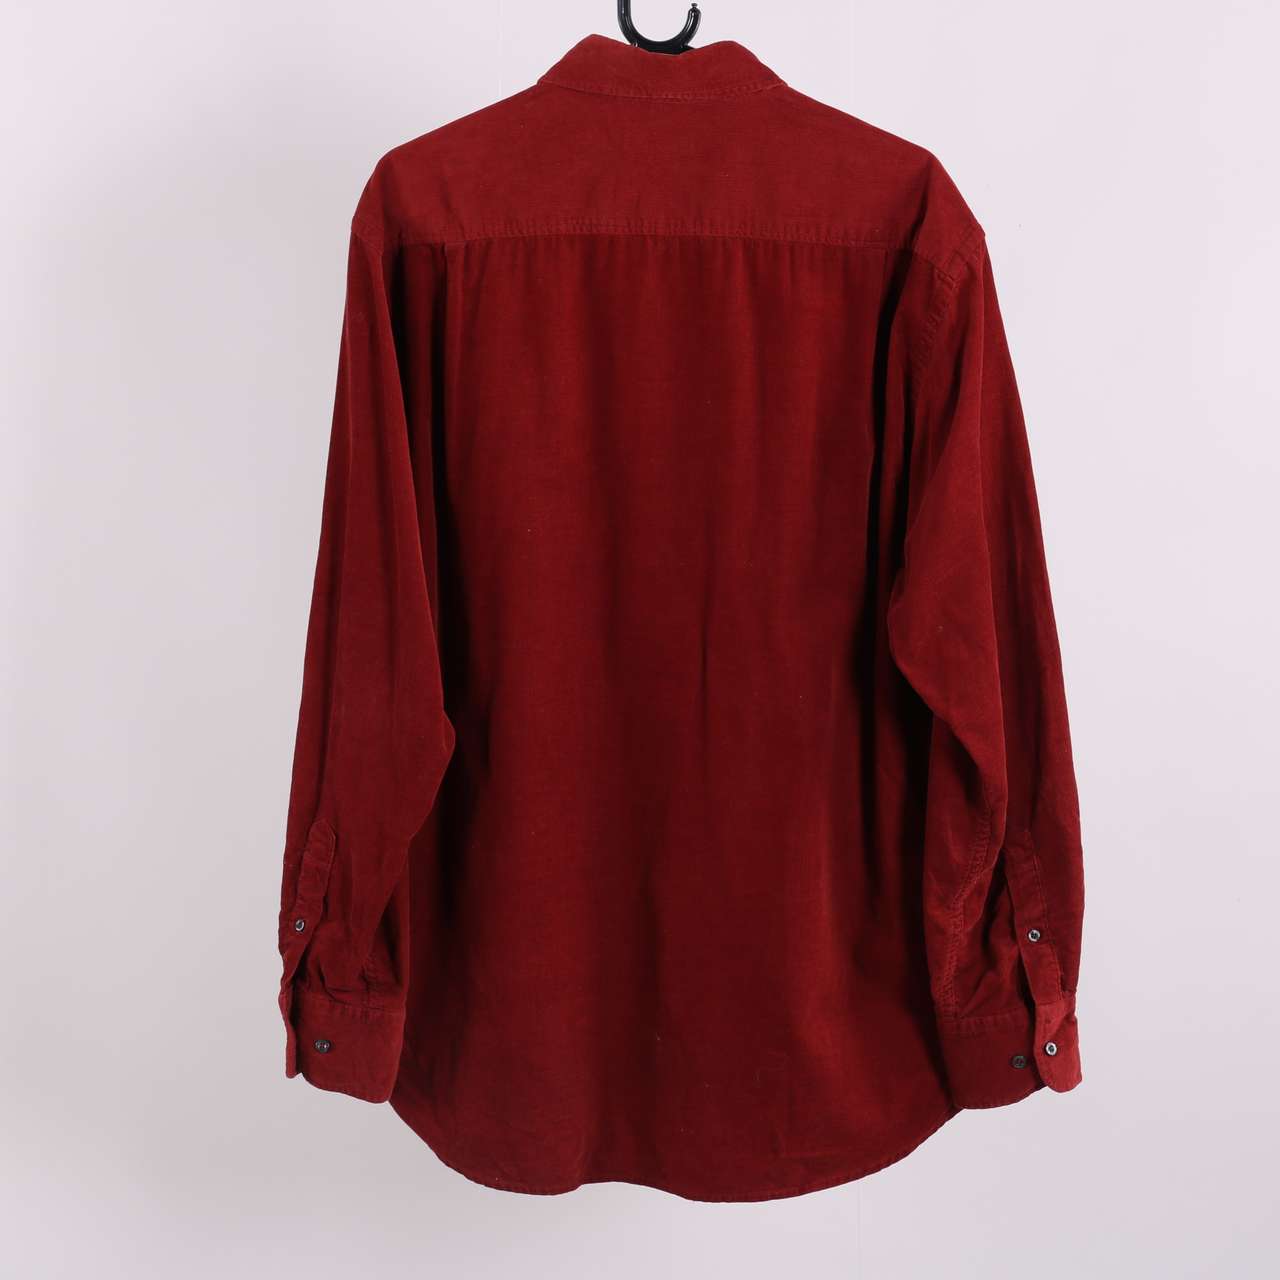 Kitaro Rust 100% Cotton Corduroy Shirt - Size XL